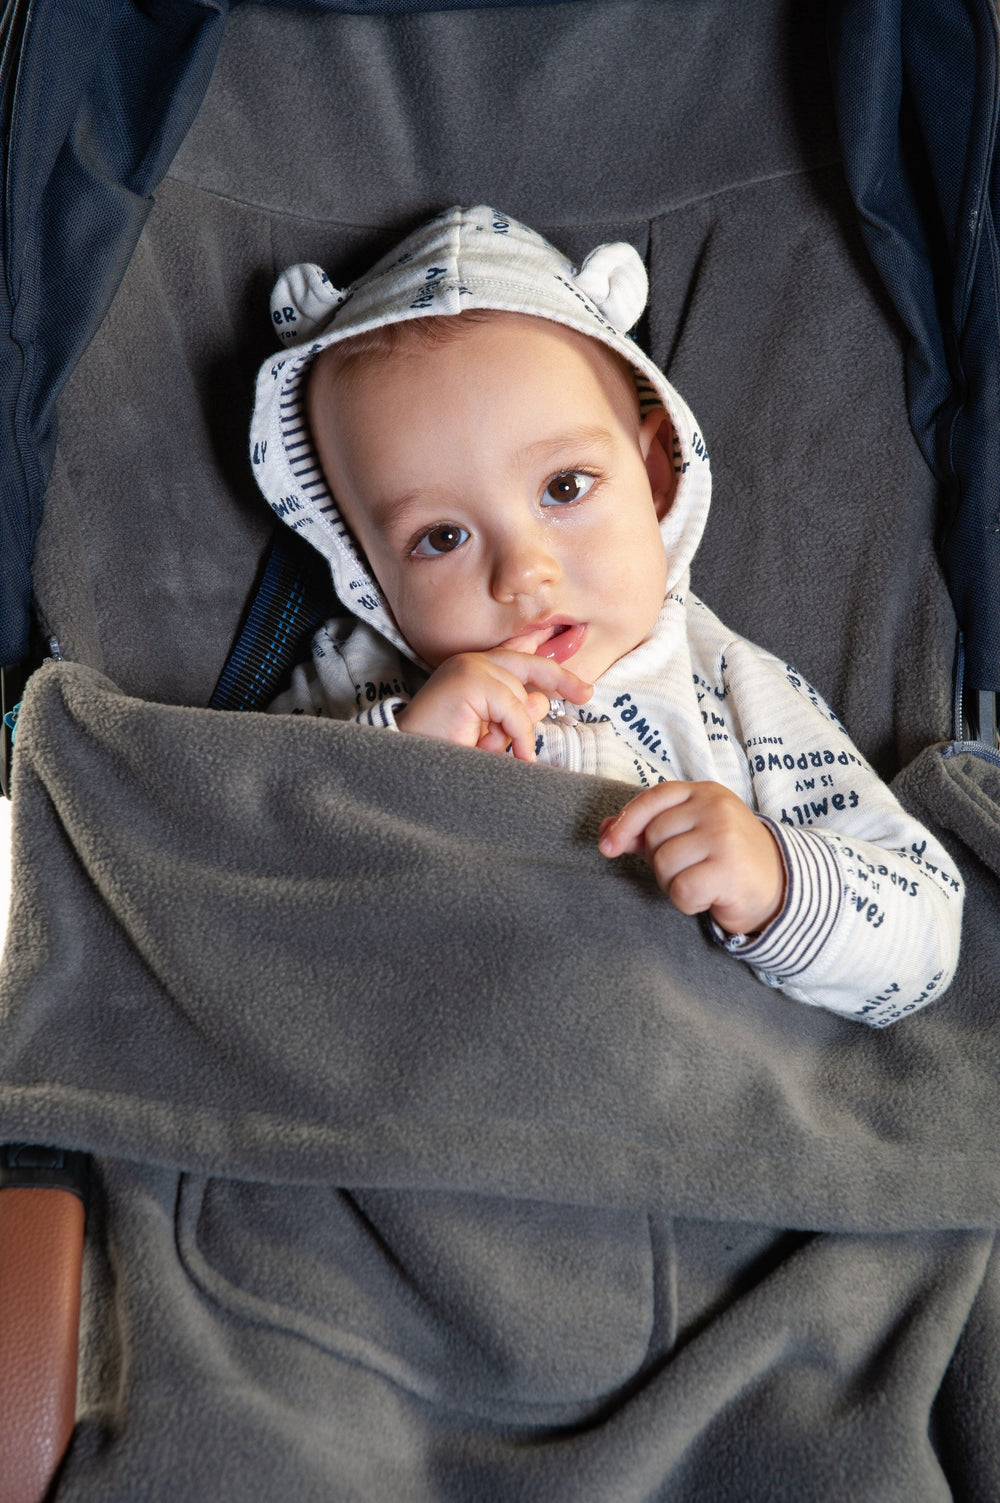 Buggysnuggle Just Charcoal Snuggle Fleece Baby Stroller Accessories Buggysnuggle 